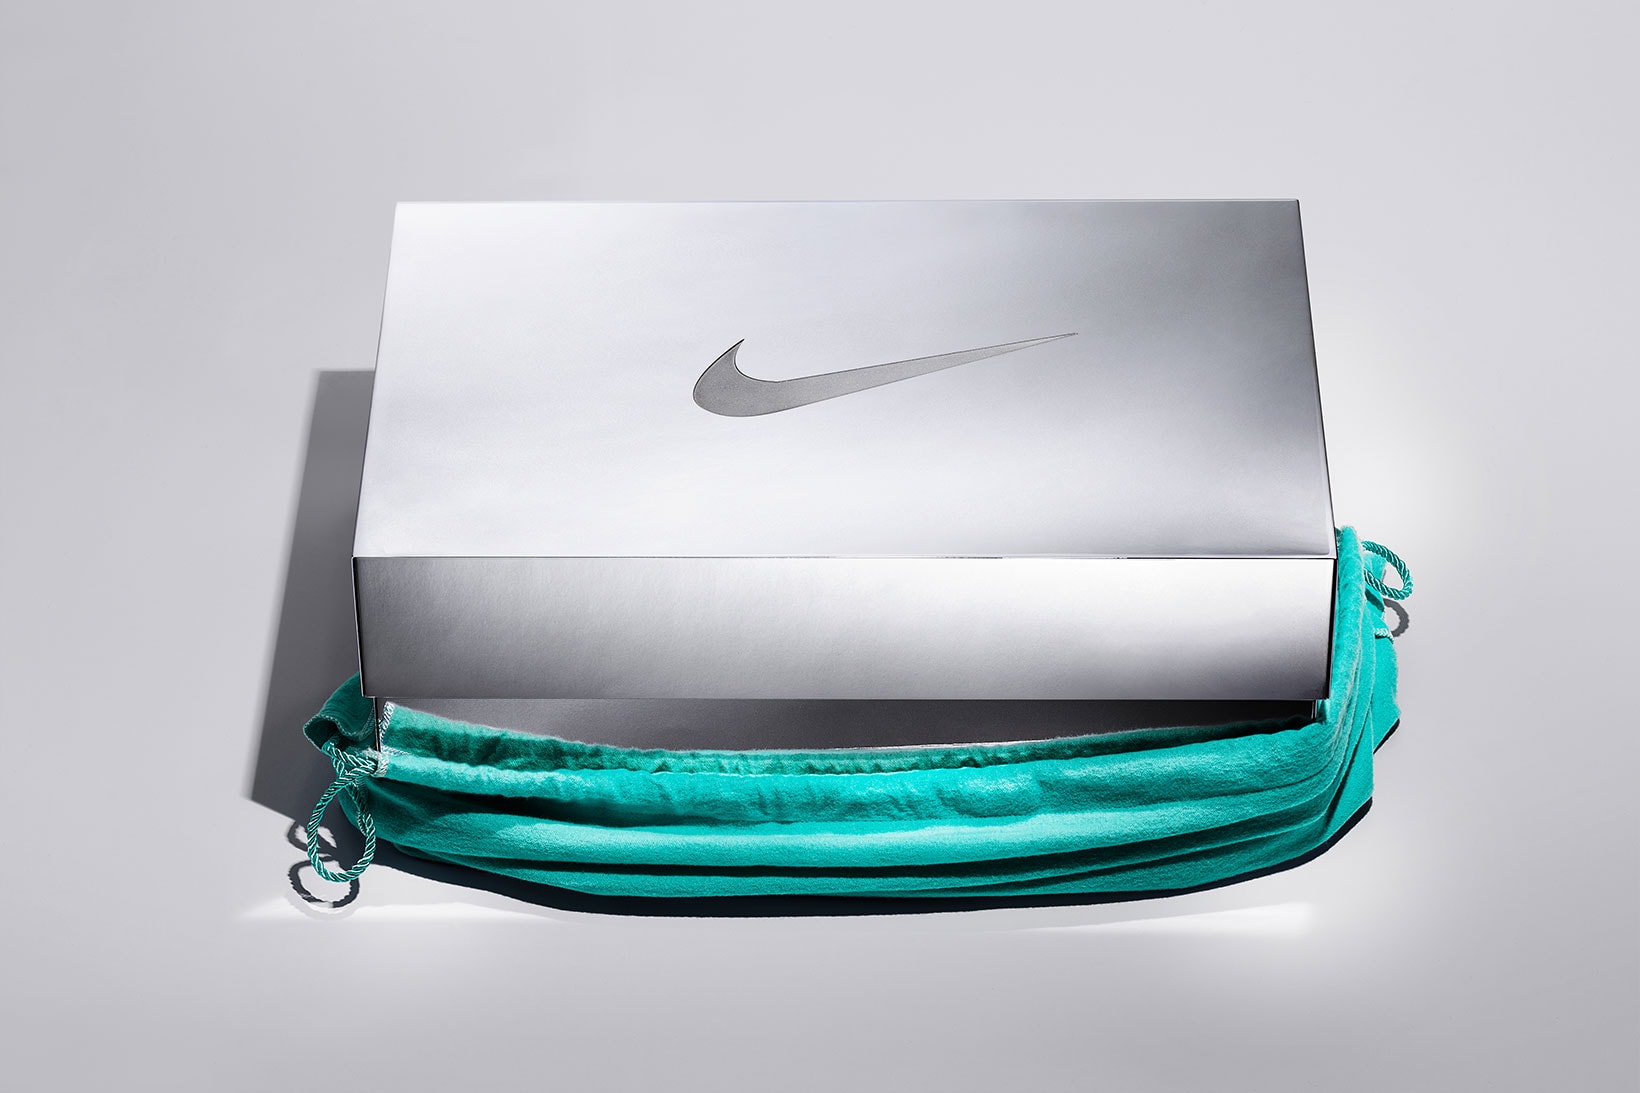 Shoebox-Inspired Bold Bags : rectangular bag